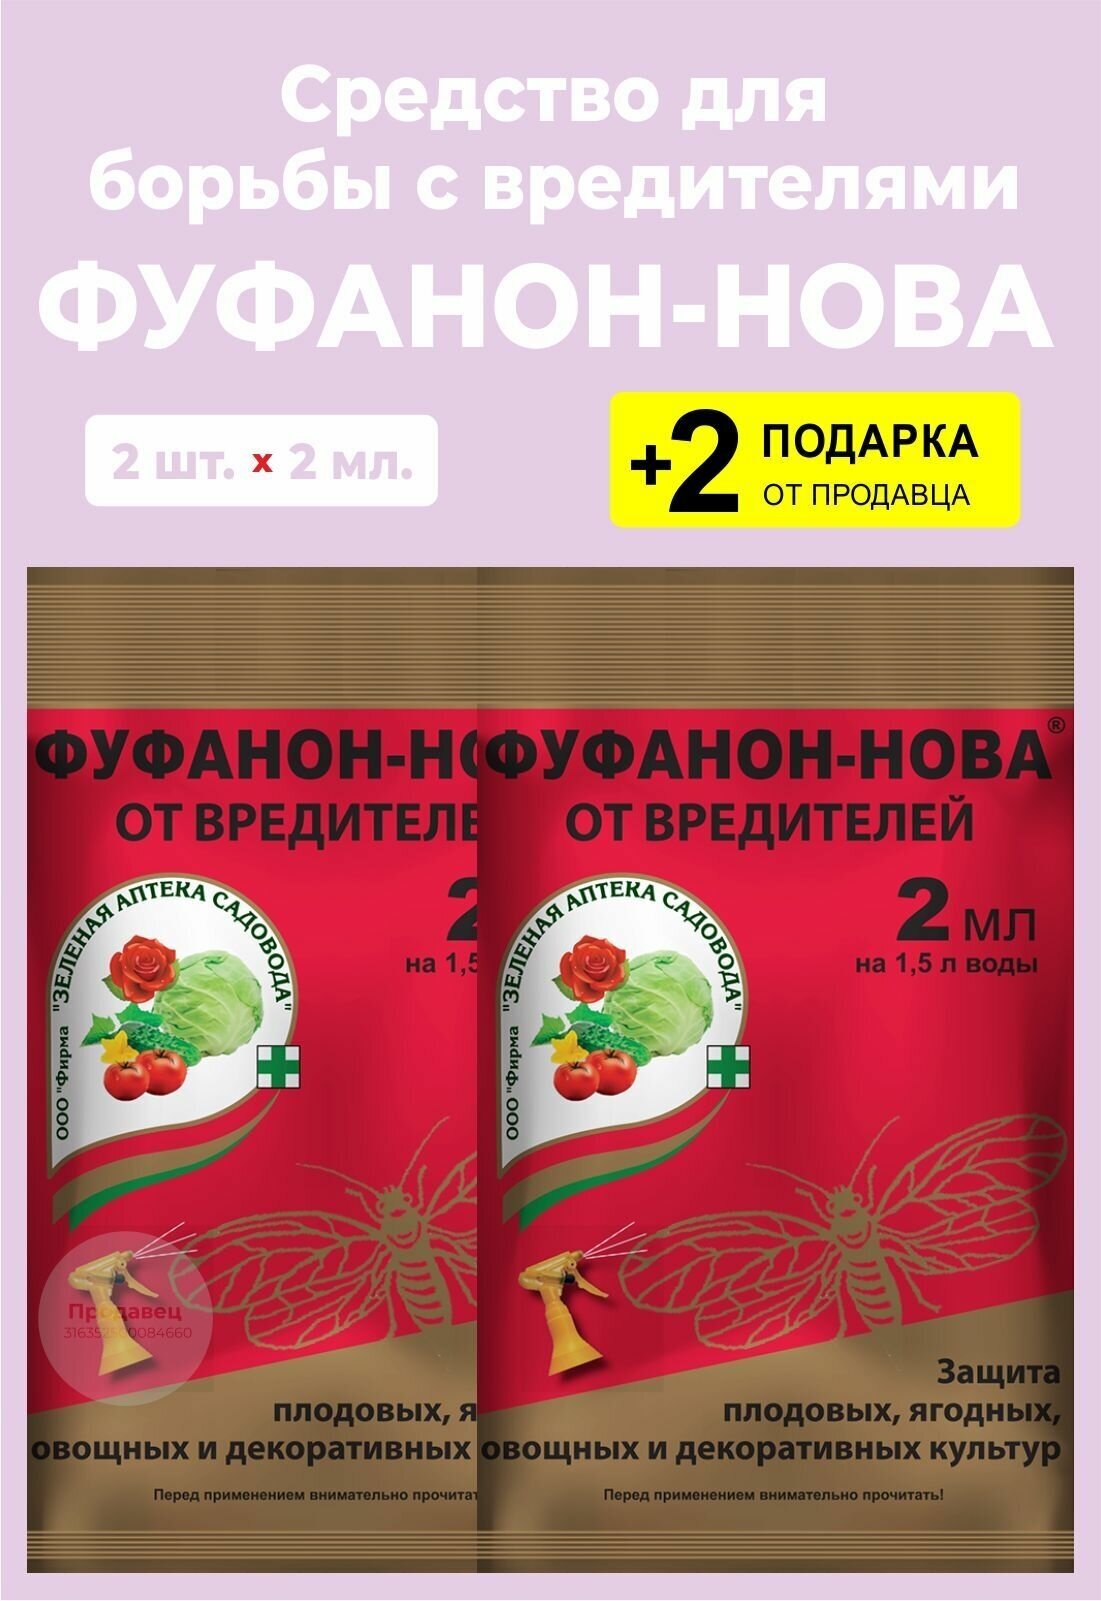 Средство "Фуфанон-нова" от насекомых-вредителей, 2 мл., 2 упаковки + 2 Подарка